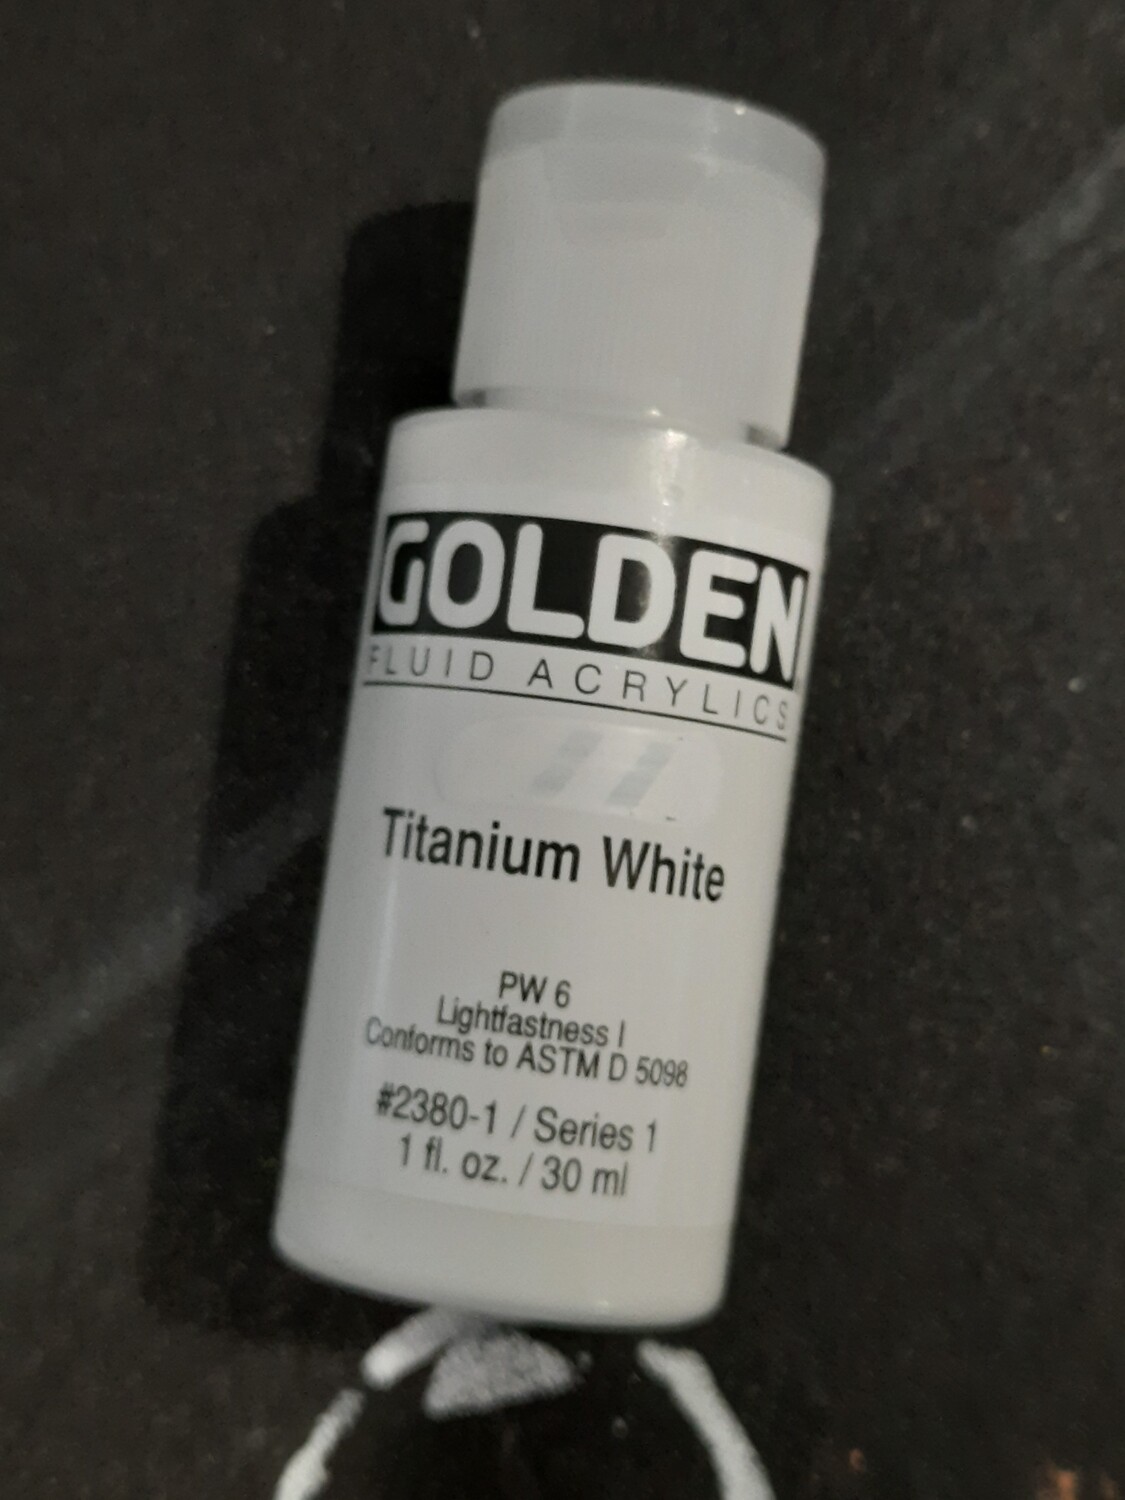 Titanium white fluid acrylic